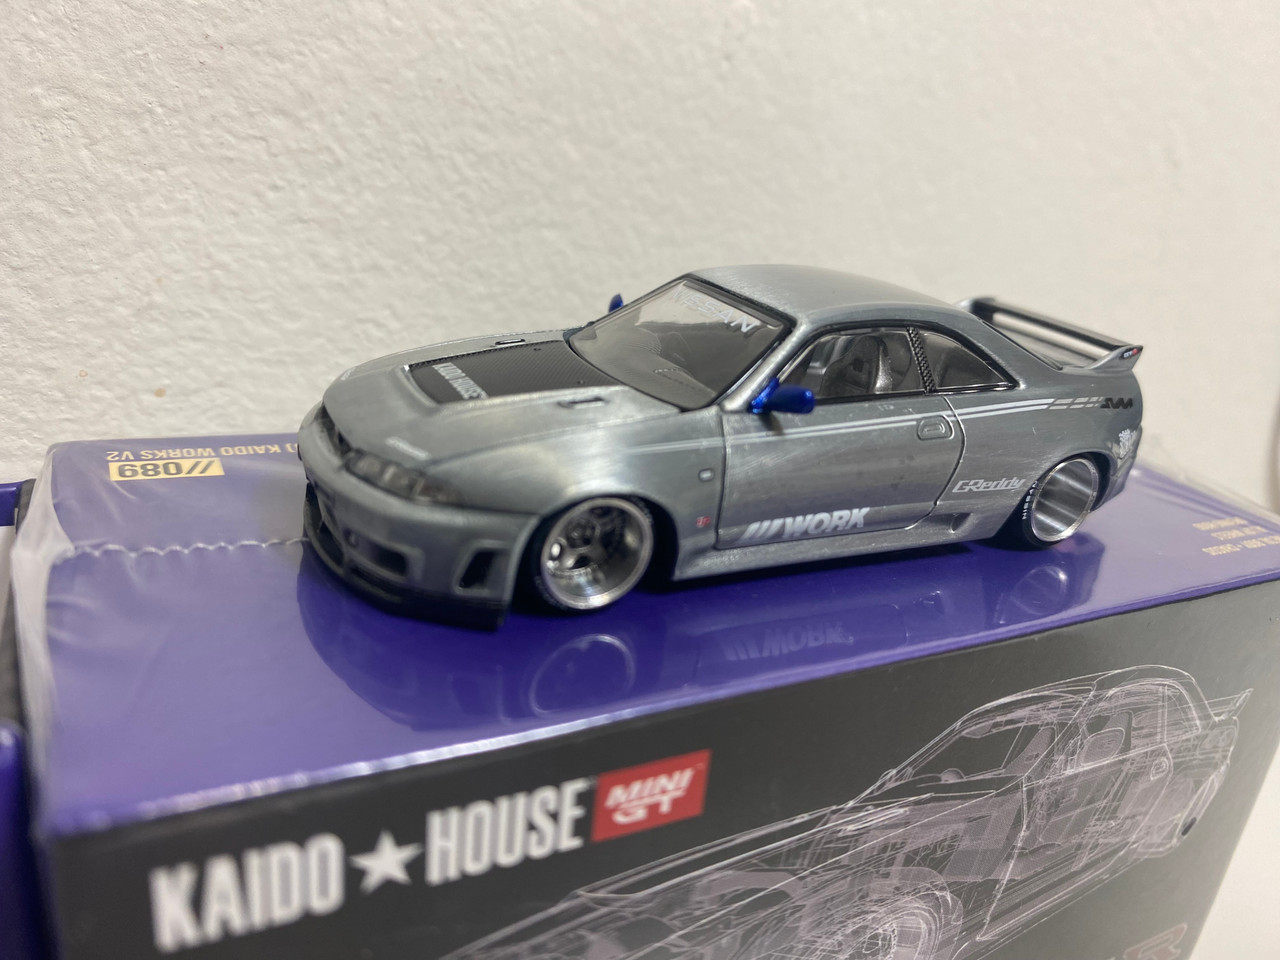 CHASE CAR 1/64 Kaido House & Mini GT Nissan Skyline GT-R (R33) Kaido Works V2 Diecast Car Model